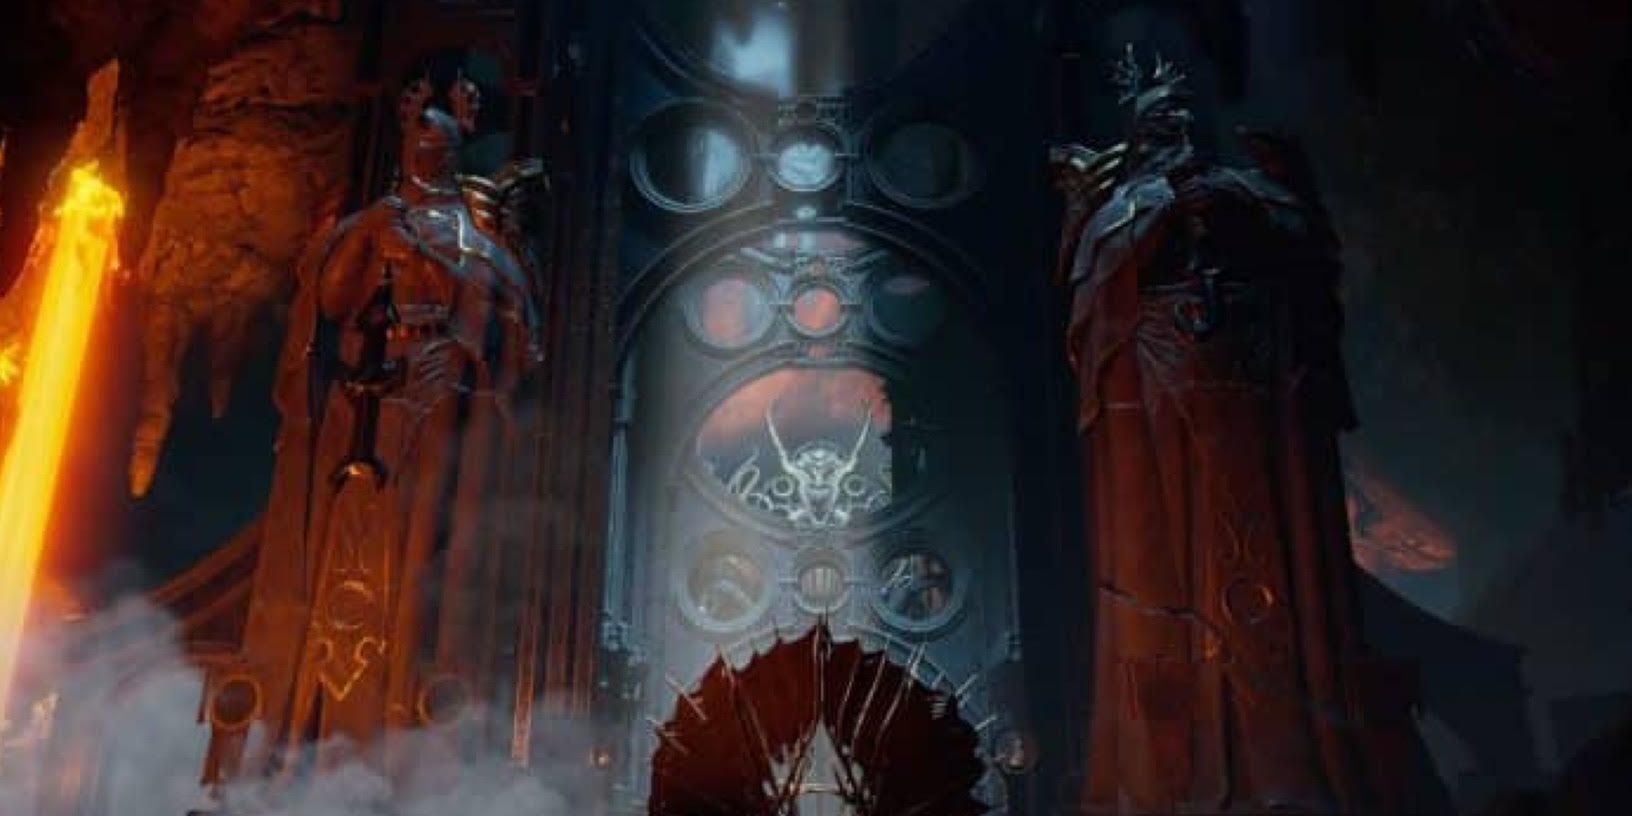 Moonrise Towers, Baldur's Gate 3